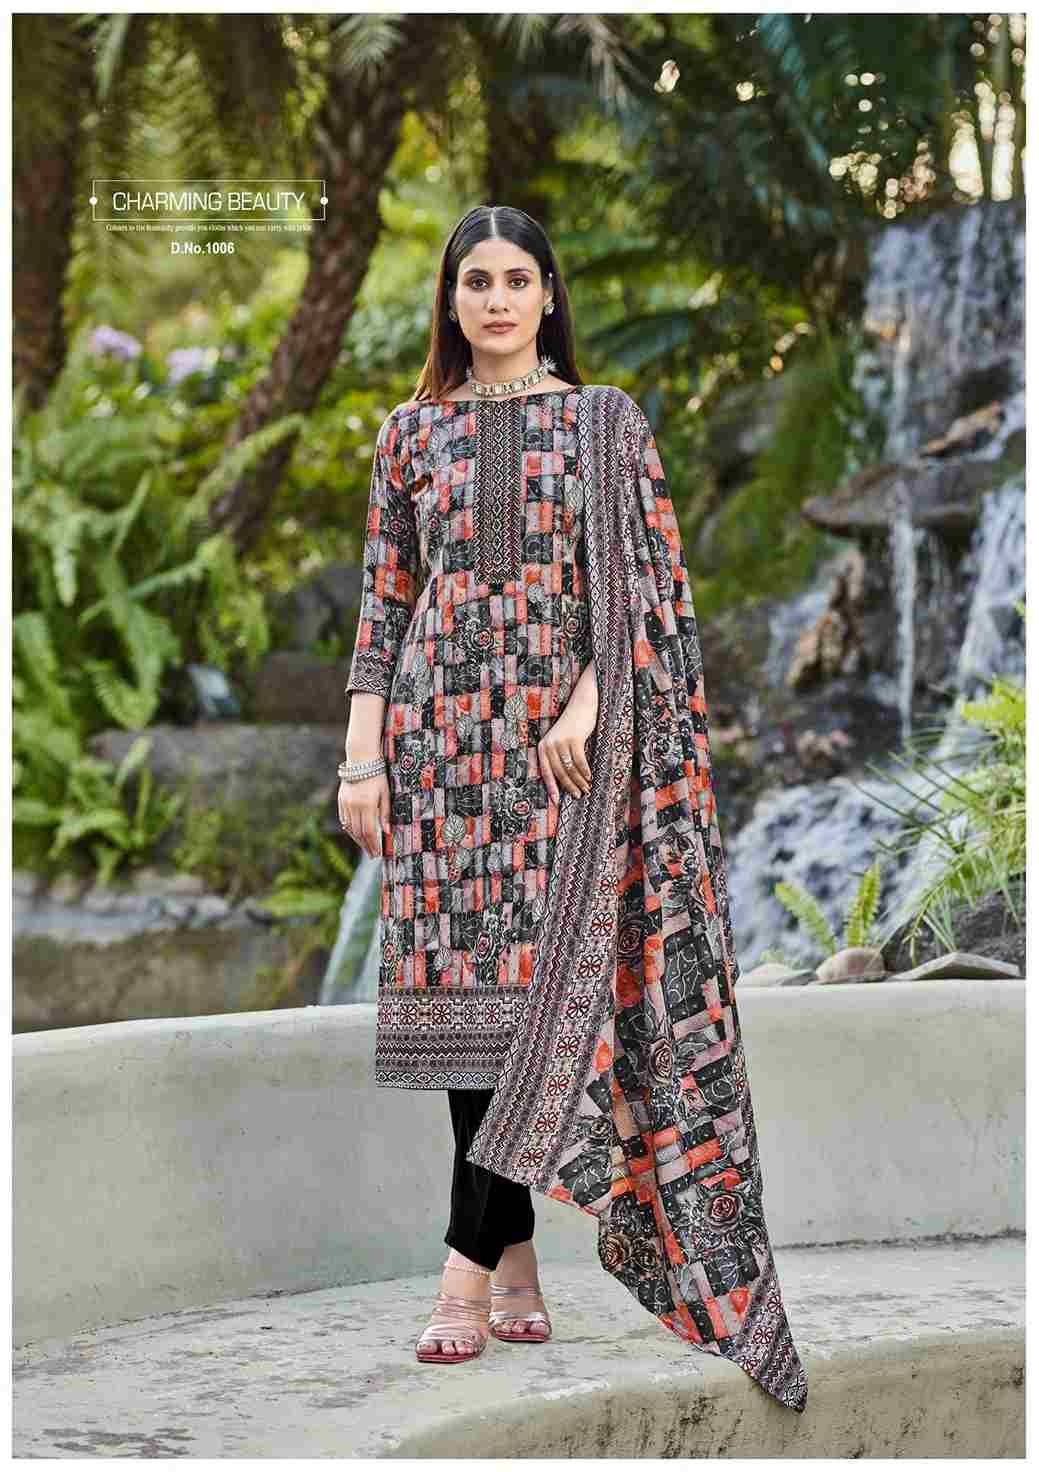 Dilara Vol-2 By Roli Moli 1001 To 1008 Series Beautiful Festive Suits Stylish Fancy Colorful Casual Wear & Ethnic Wear Pure Pashmina Digital Print Dresses At Wholesale Price